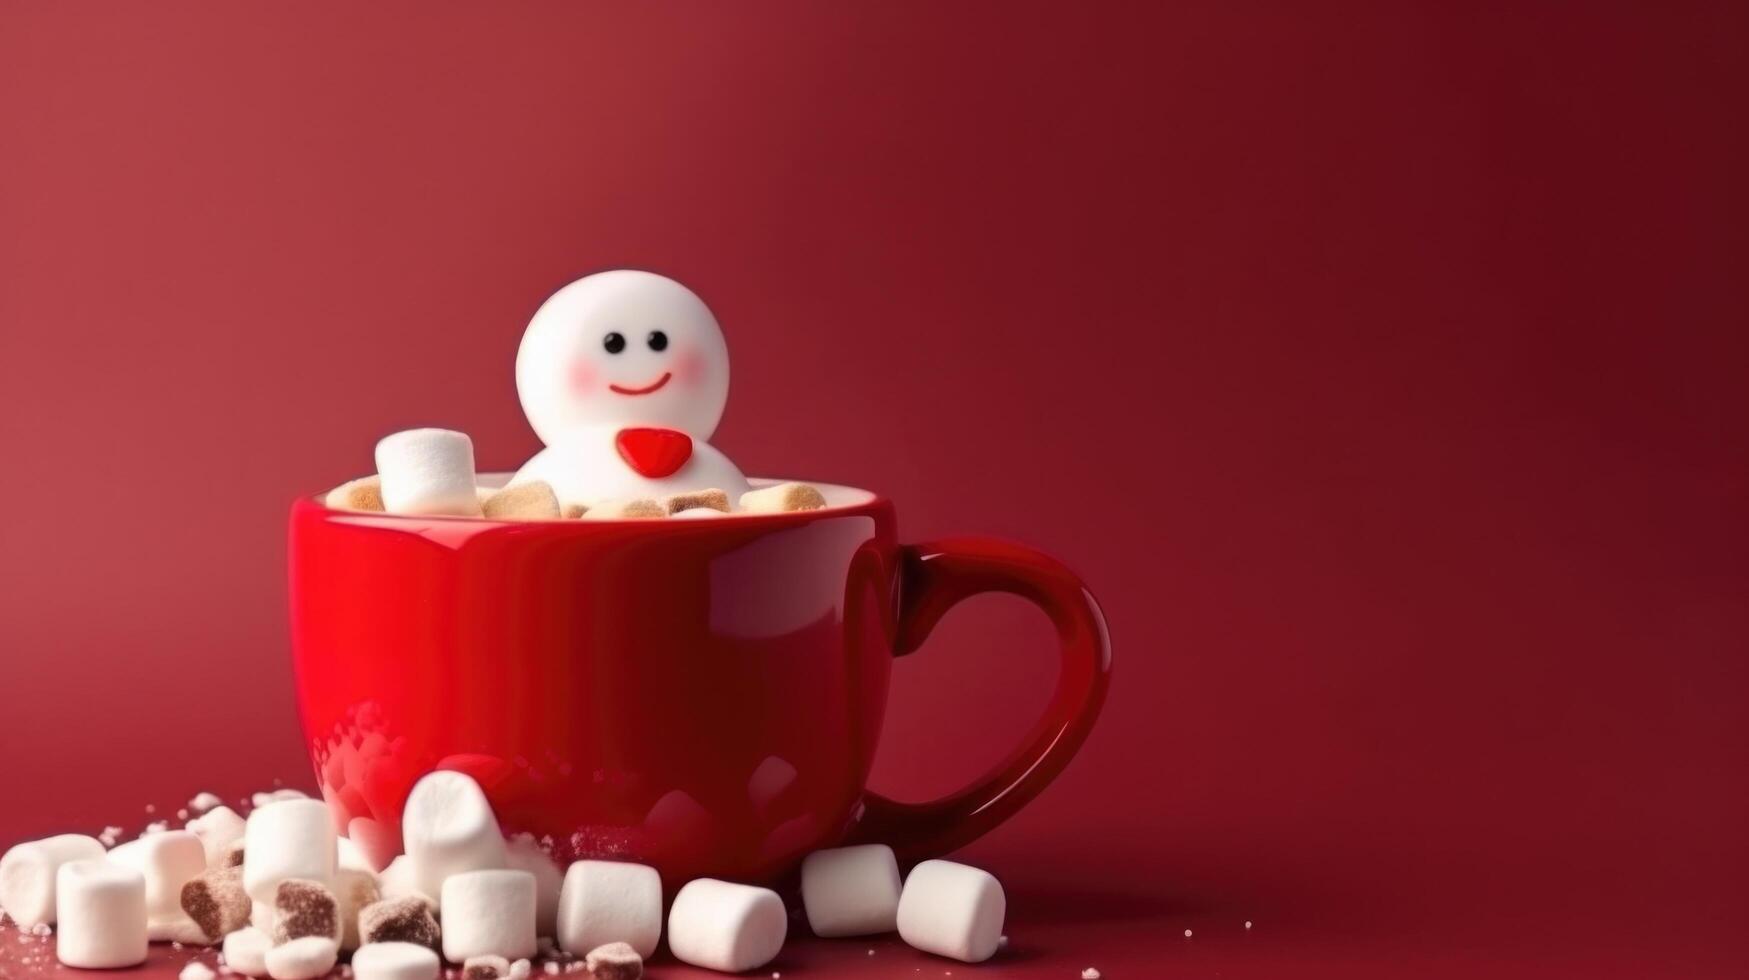 Red hot chocolate mug with melted marshmallows. Illustration photo